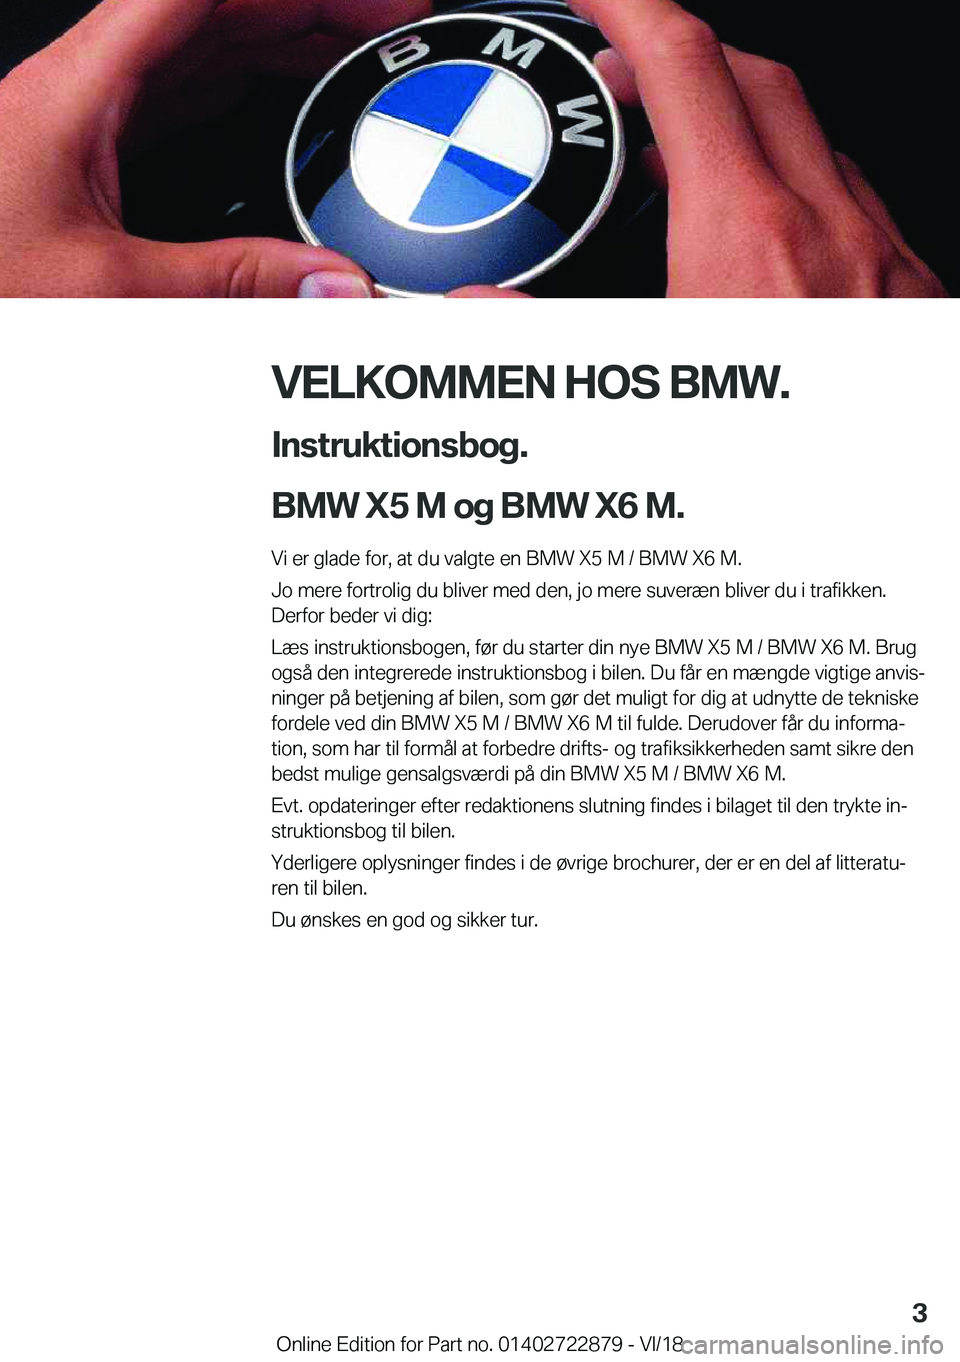 BMW X6 M 2019  InstruktionsbØger (in Danish) �V�E�L�K�O�M�M�E�N��H�O�S��B�M�W�.
�I�n�s�t�r�u�k�t�i�o�n�s�b�o�g�.
�B�M�W��X�5��M��o�g��B�M�W��X�6��M�.
�V�i��e�r��g�l�a�d�e��f�o�r�,��a�t��d�u��v�a�l�g�t�e��e�n��B�M�W��X�5��M��/�